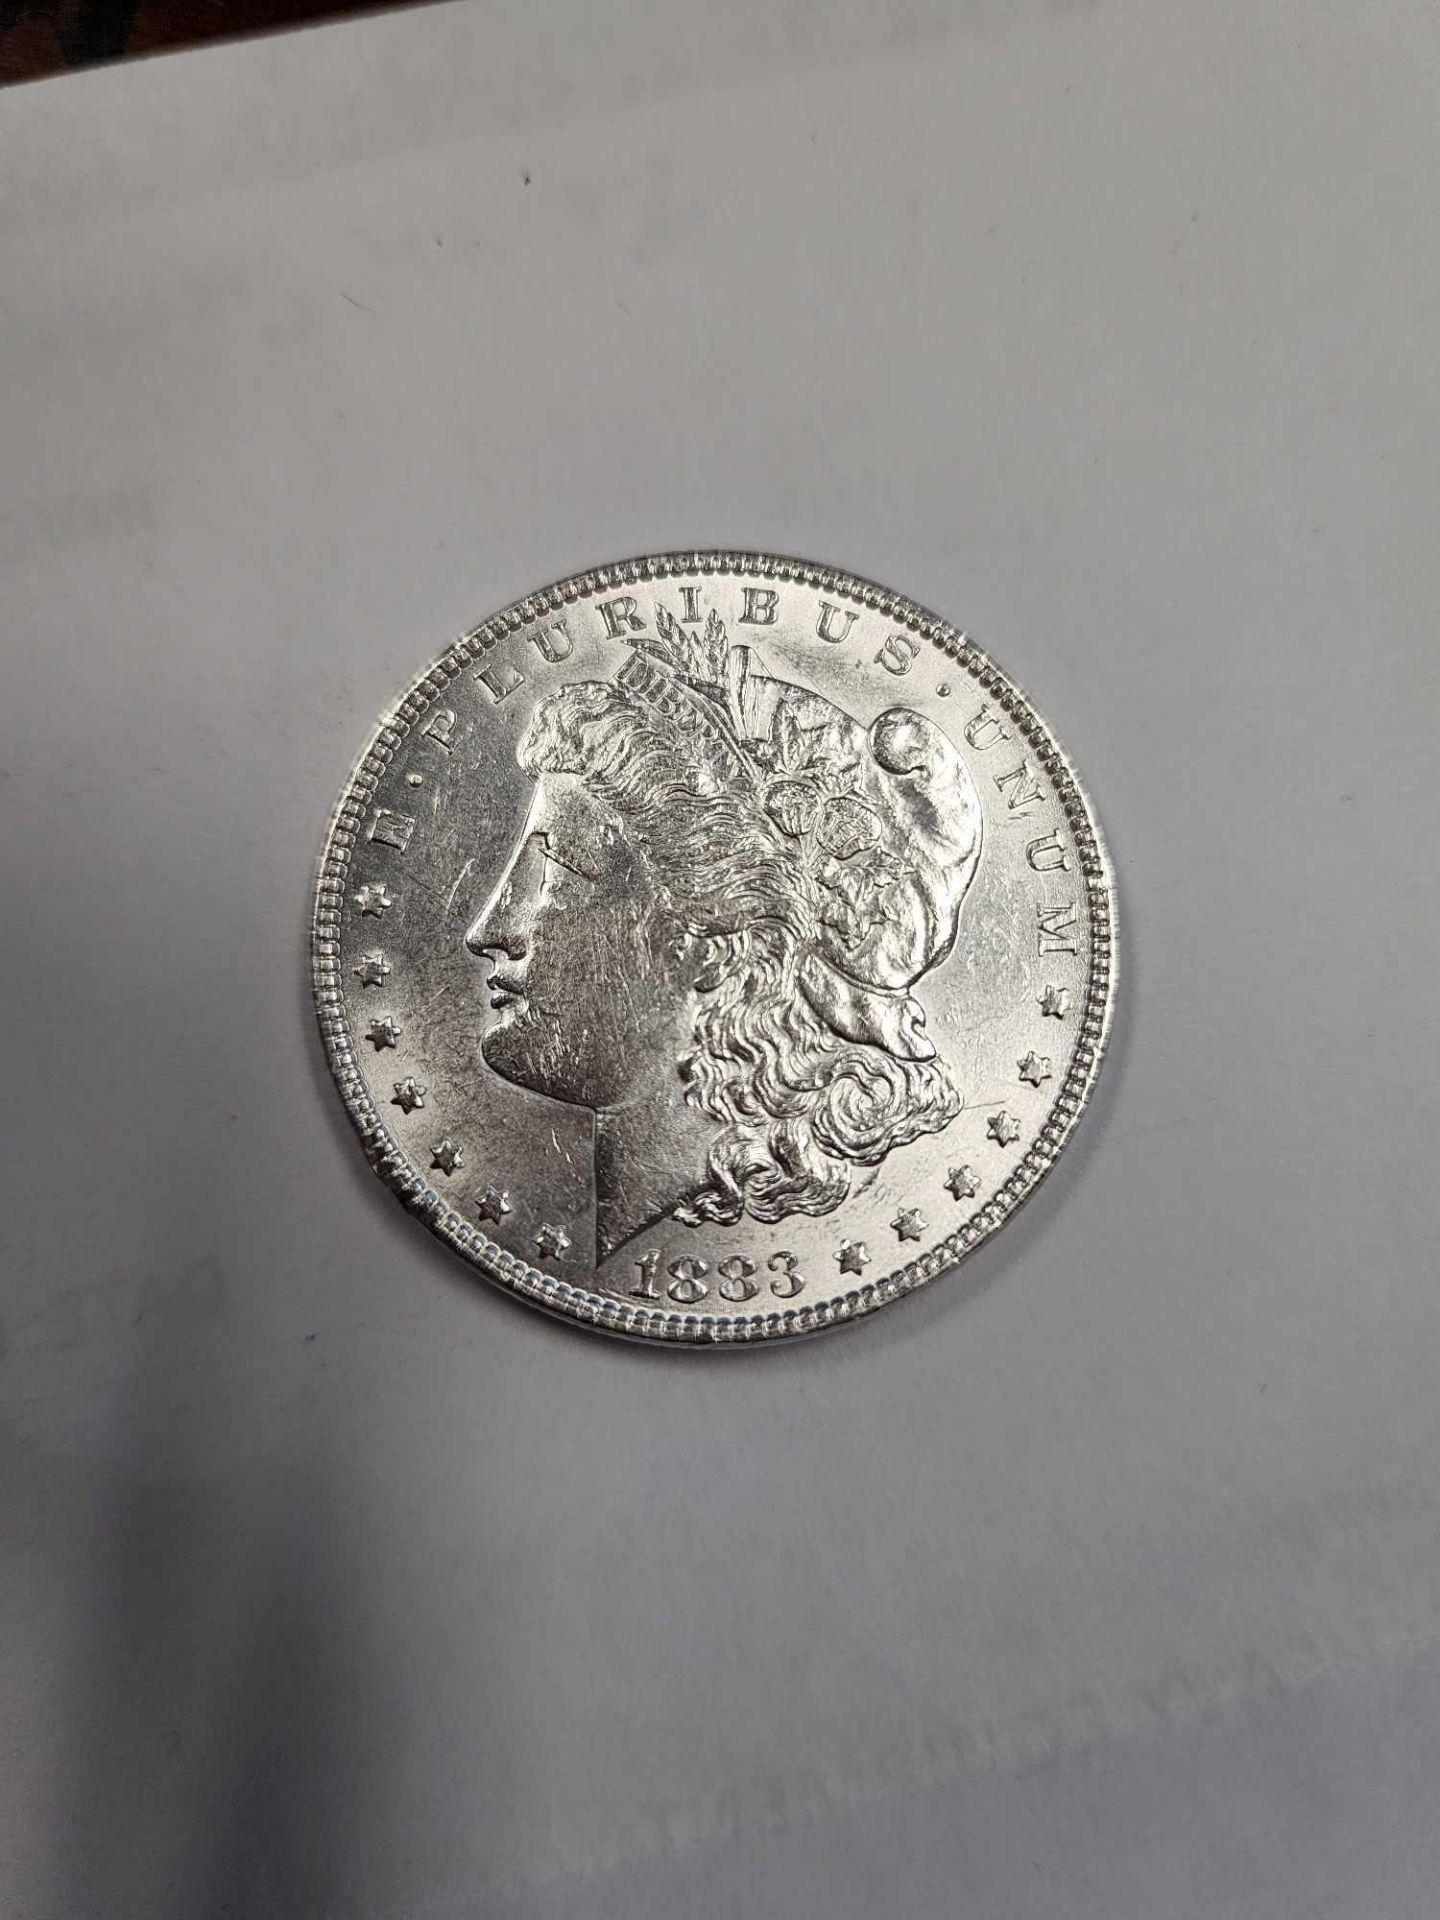 1883 Morgan Dollar (uncirculated)